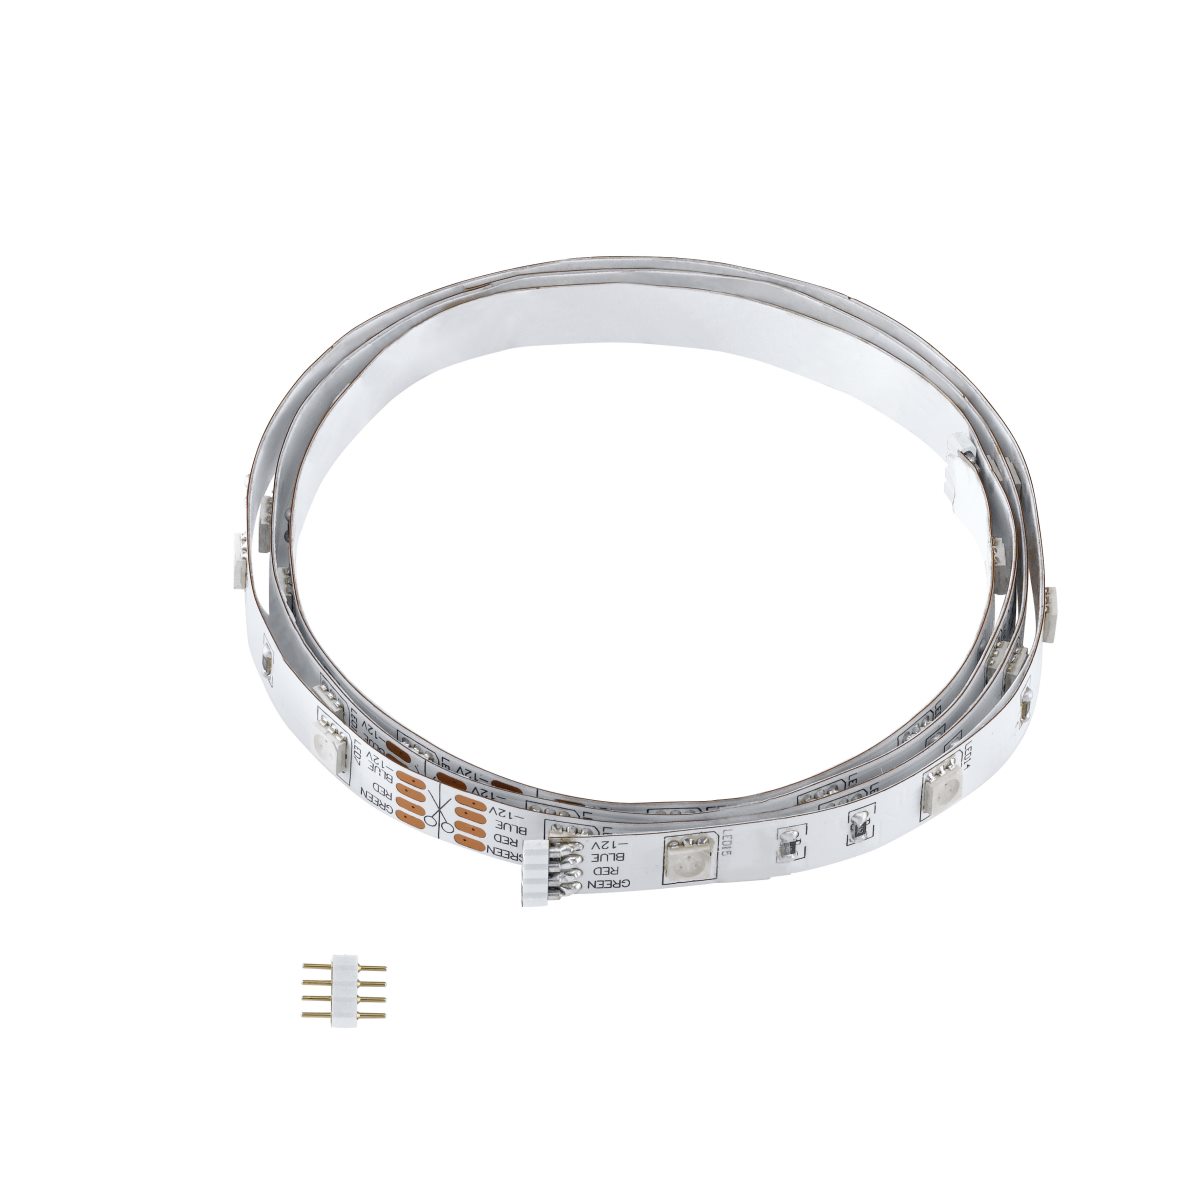 EGLO LED Stripes module LED Leuchtband 5m RGB